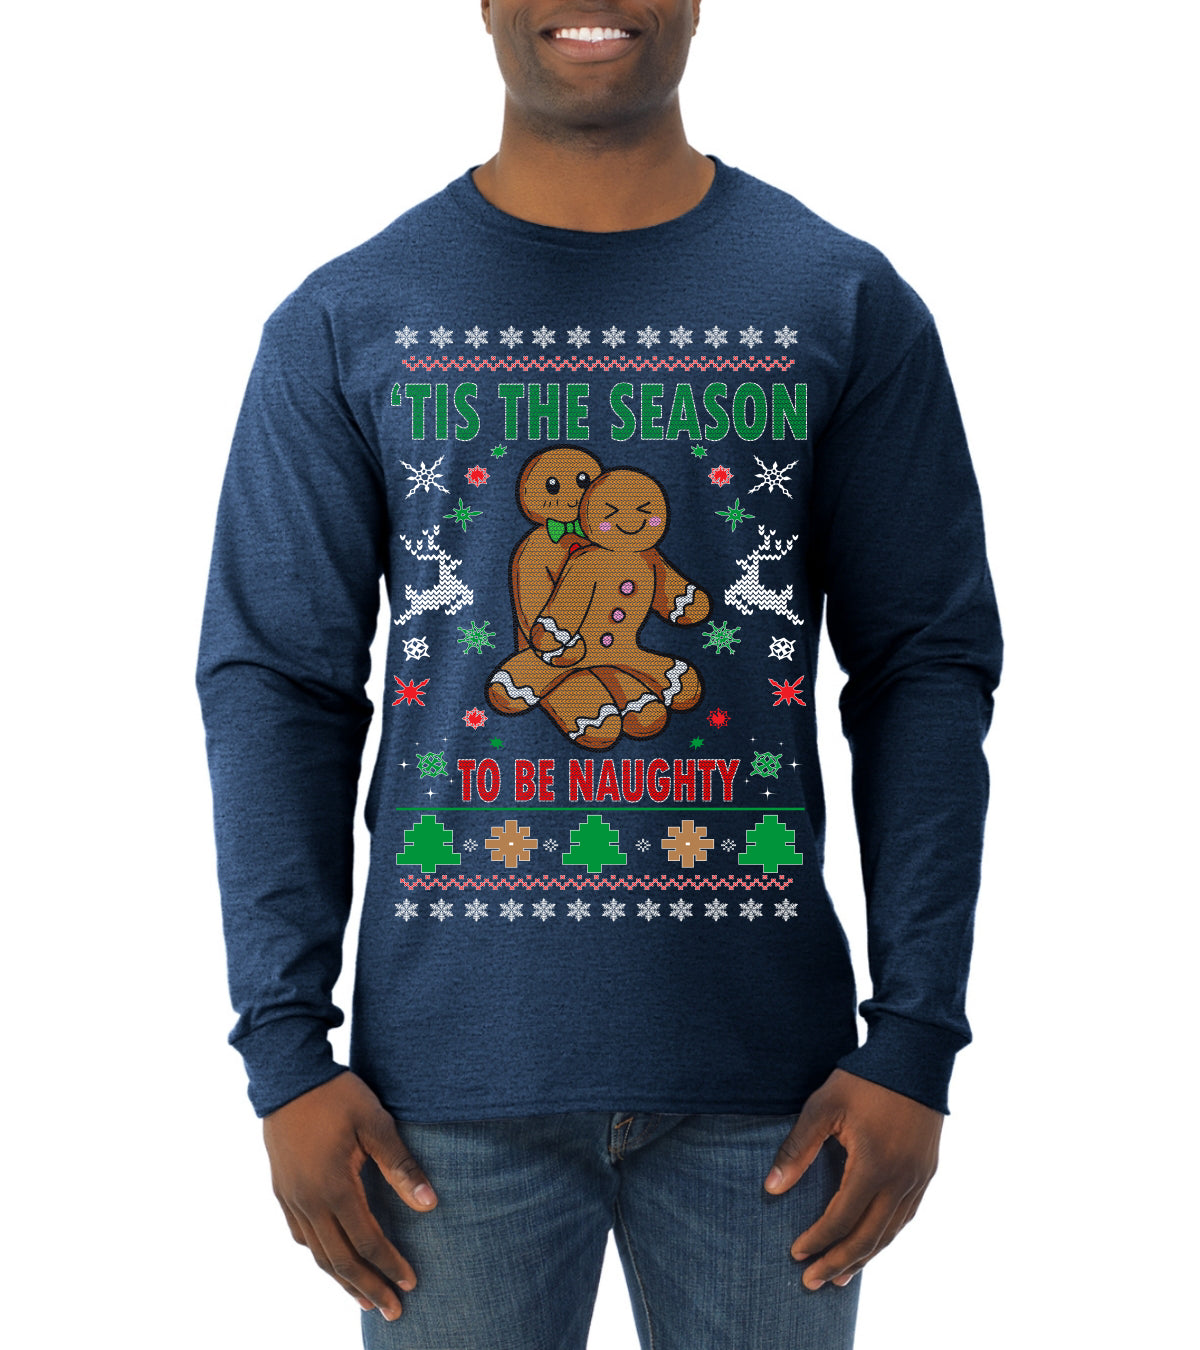 Tis' The Season To Be Naughty Ugly Christmas Sweater Mens Long Sleeve Shirt